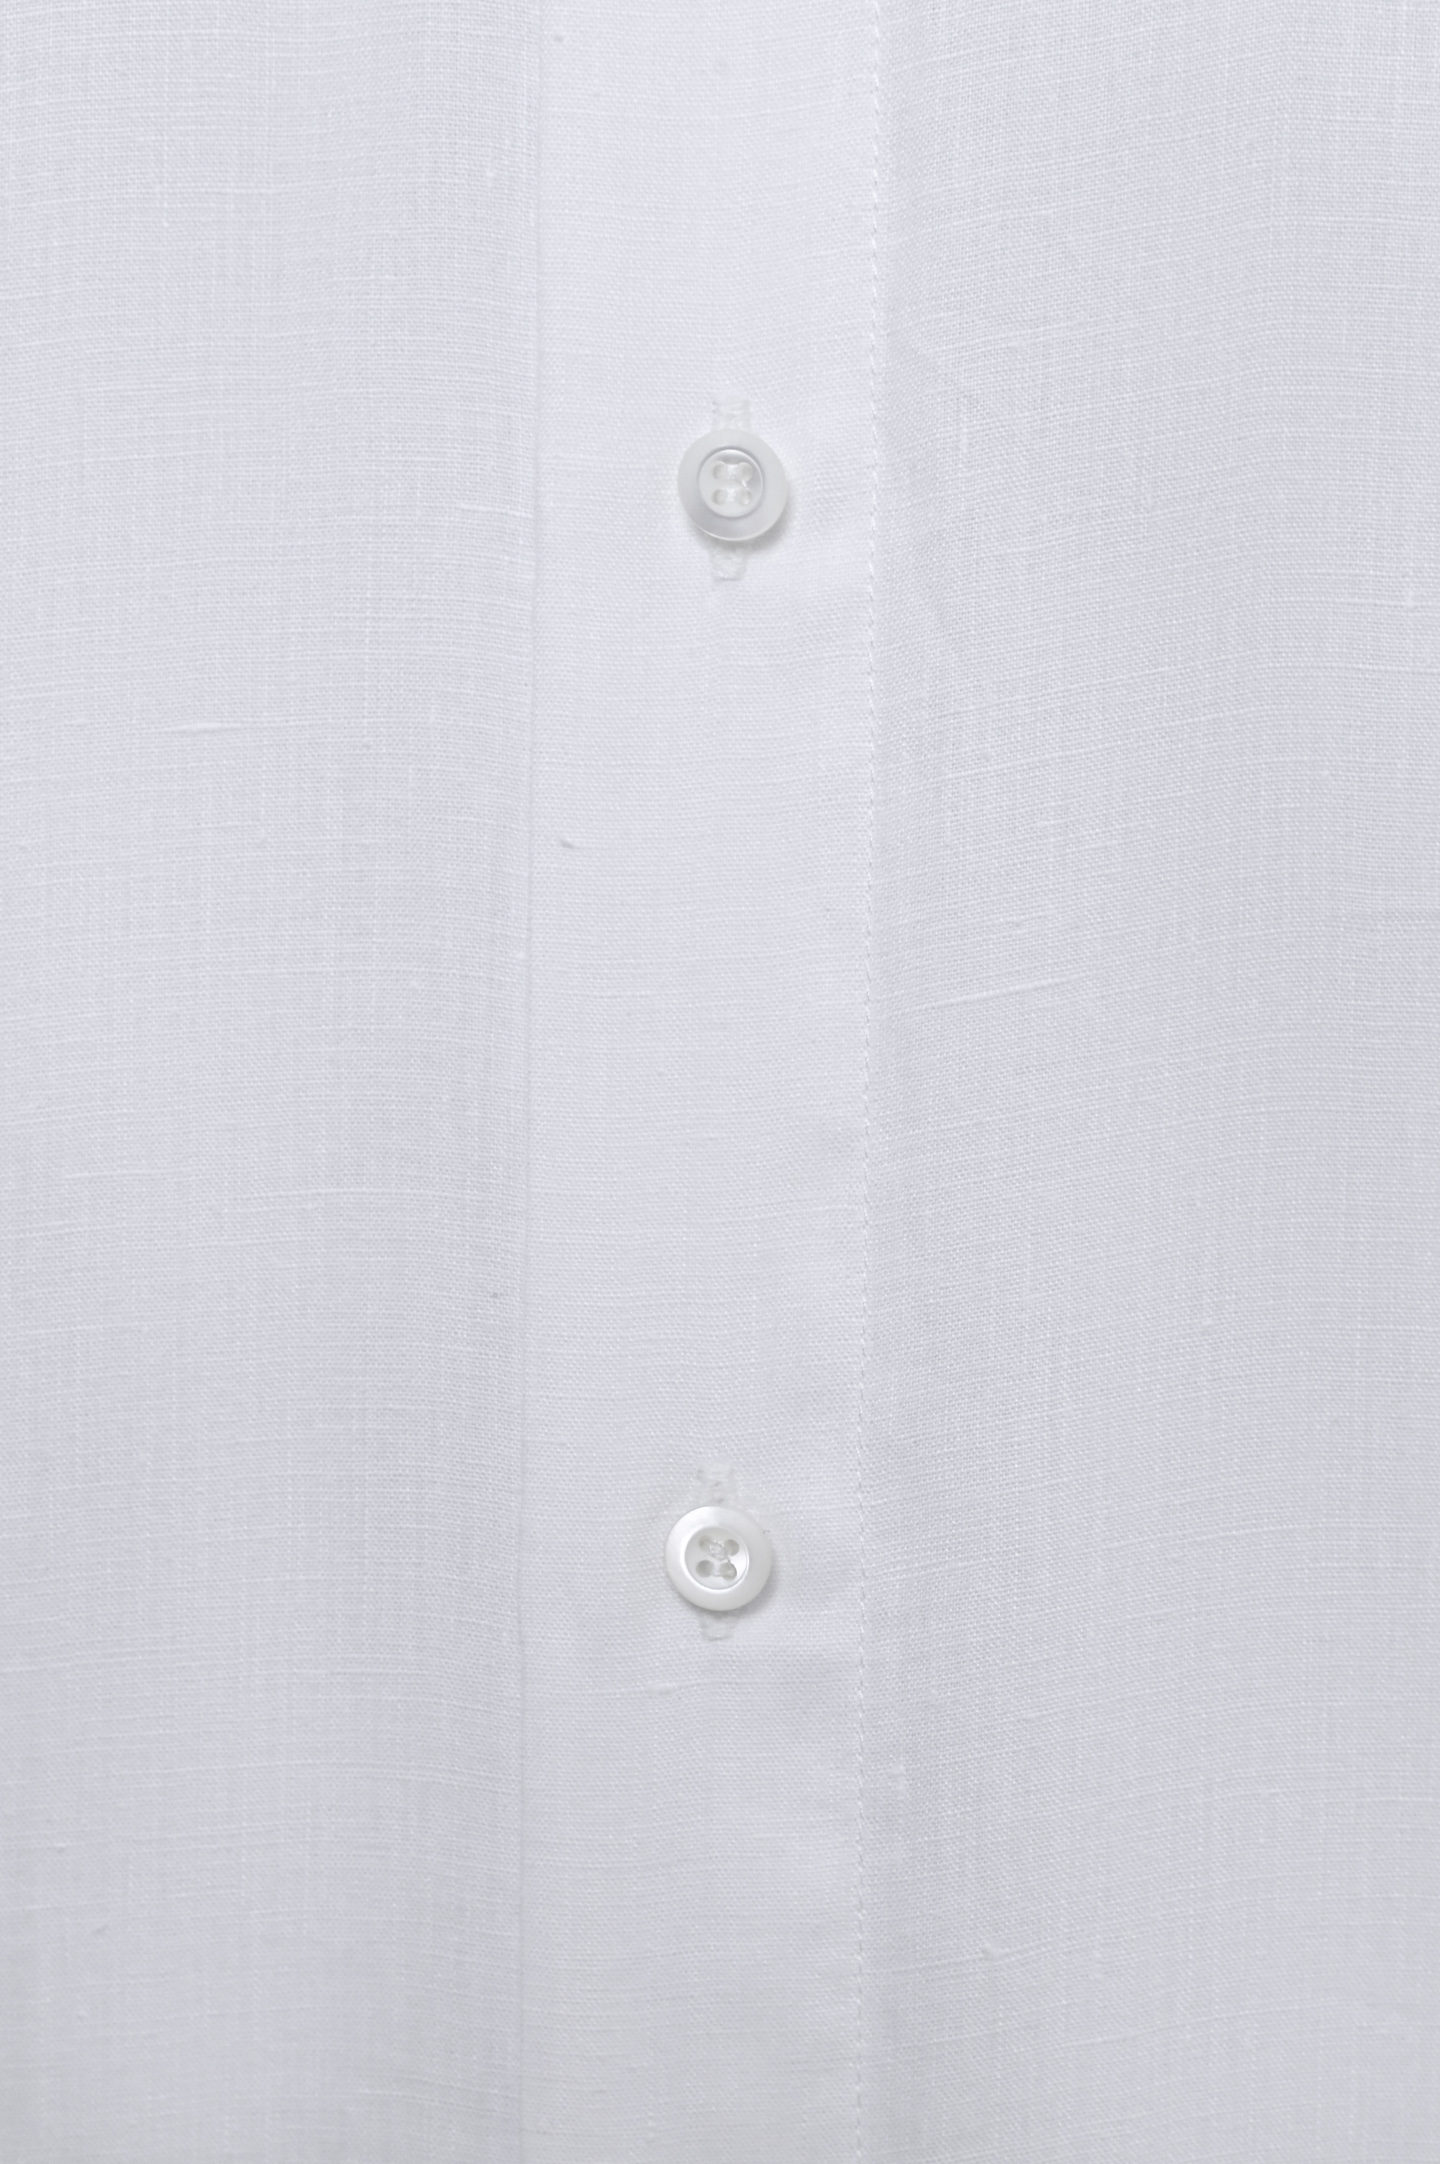 Рубашка BRUNELLO  CUCINELLI MQ6590626, цвет: Белый, Мужской